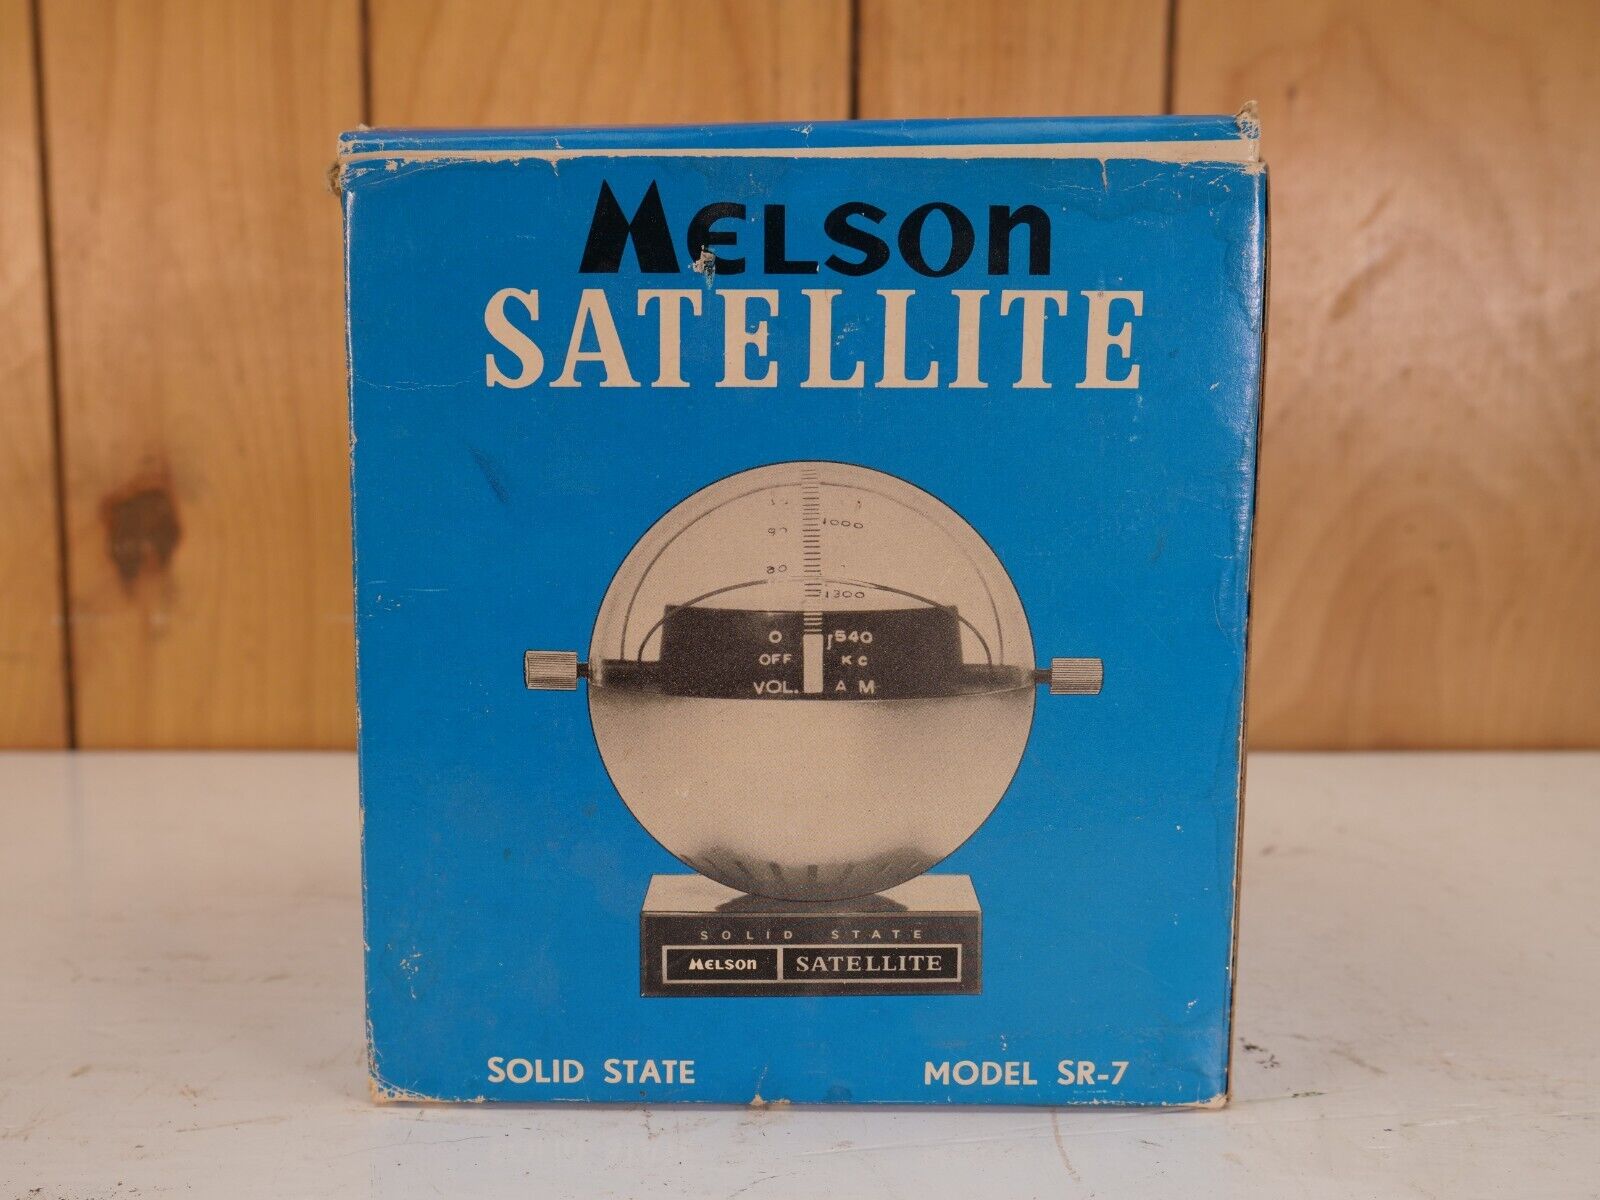 VINTAGE TRANSISTOR RADIO MELSON SATELLITE MCM 1950,S SPACE AGE TESTED